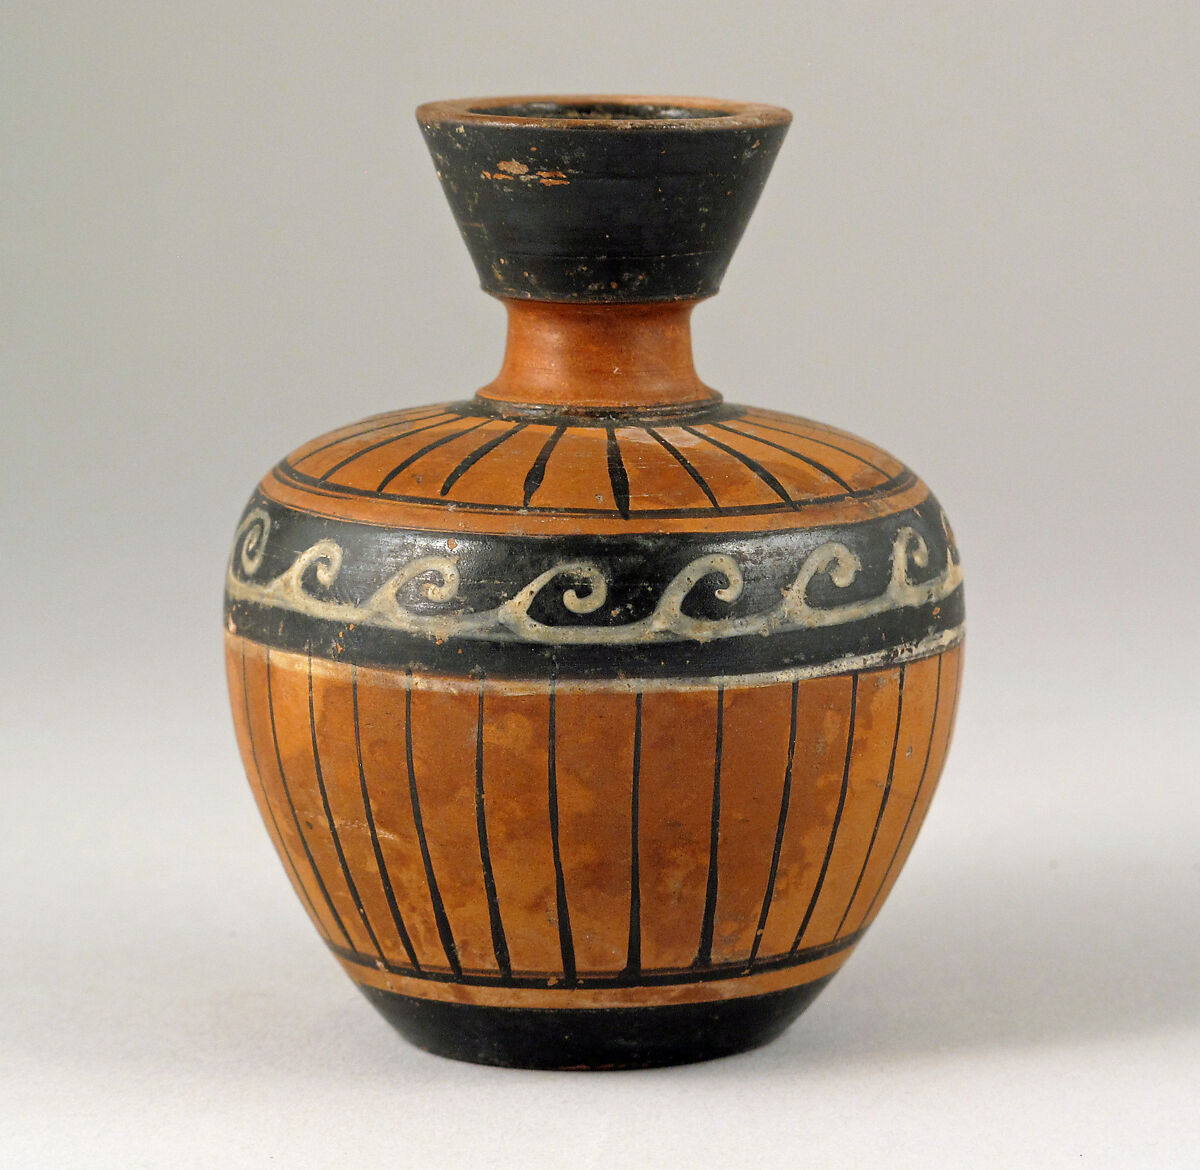 Aryballos, Attributed to the Bulas Group, Terracotta, Greek, Attic 